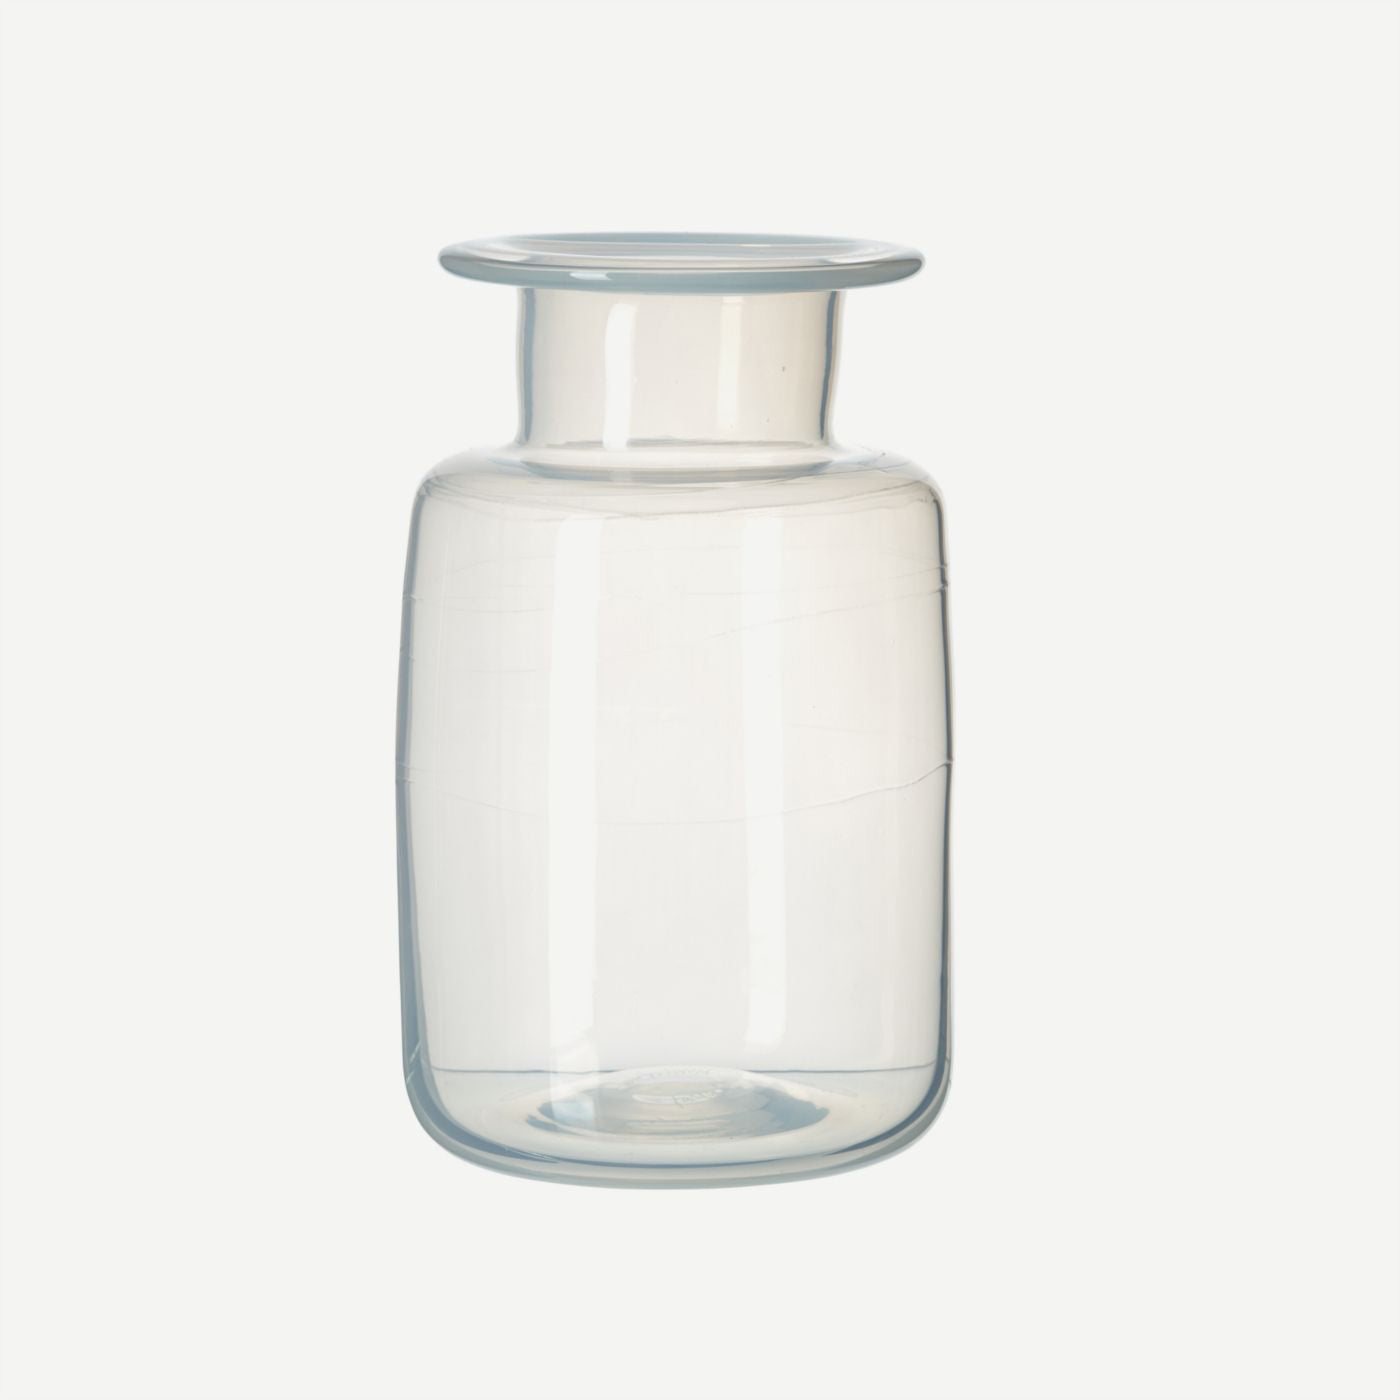 Albaster jar in medium